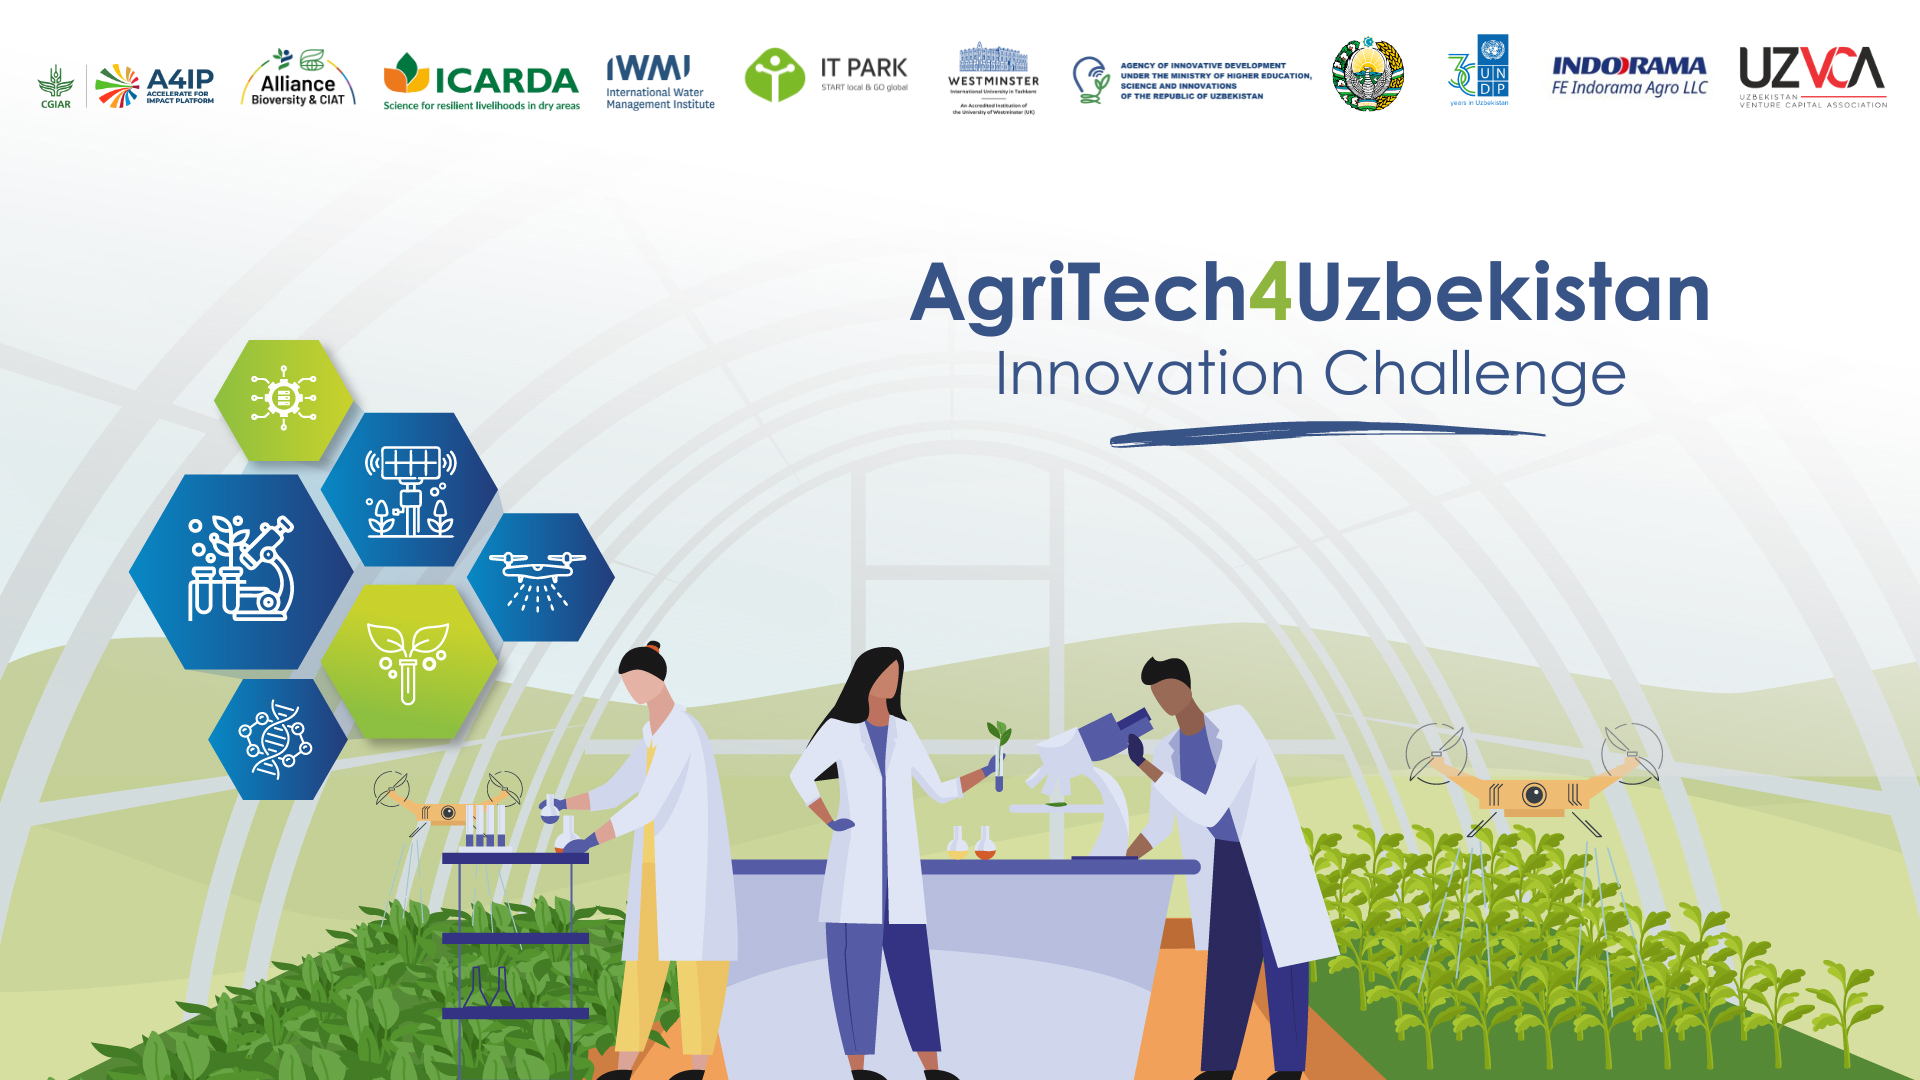 AgriTech4Uzbekistan Innovation Challenge Poster